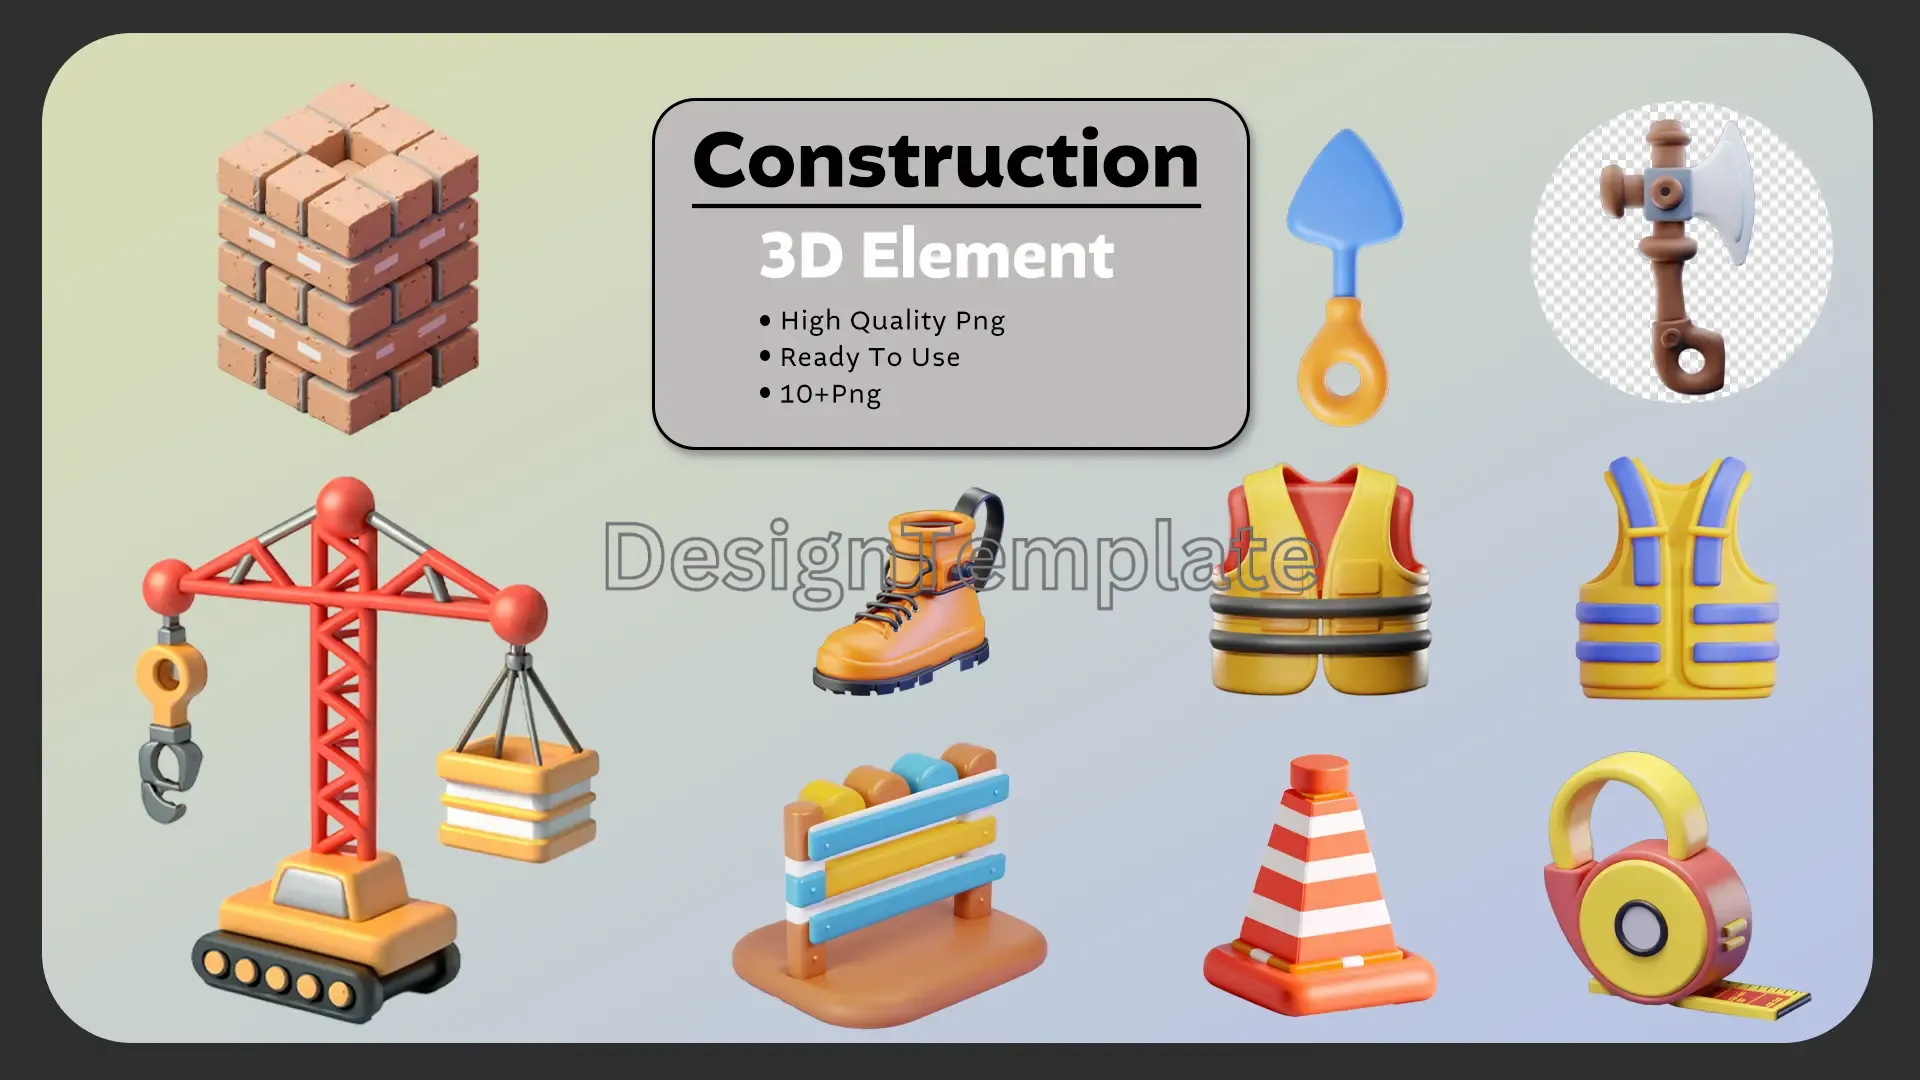 Builder's Toolbox Exquisite Construction 3D Elements Pack image